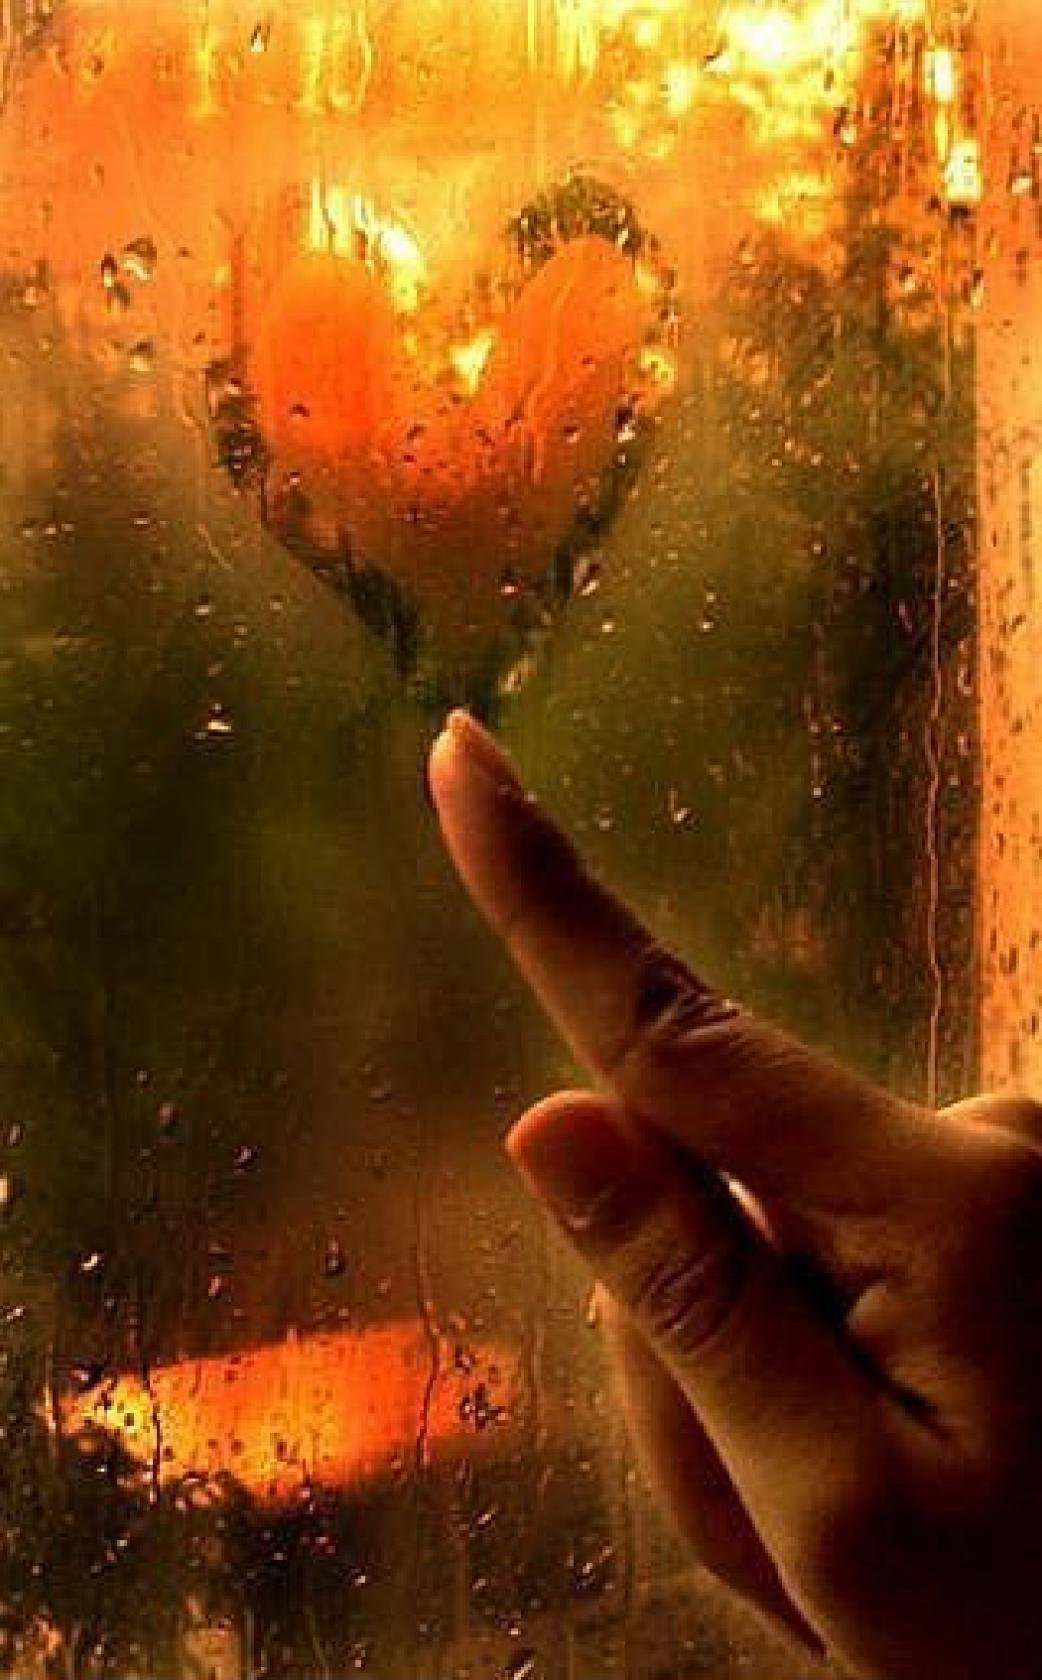 В душе тепло и солнечно. Сердце на стекле. Ладонь на стекле. Сердечко на окне в дождь. Сердечко на мокром окне.